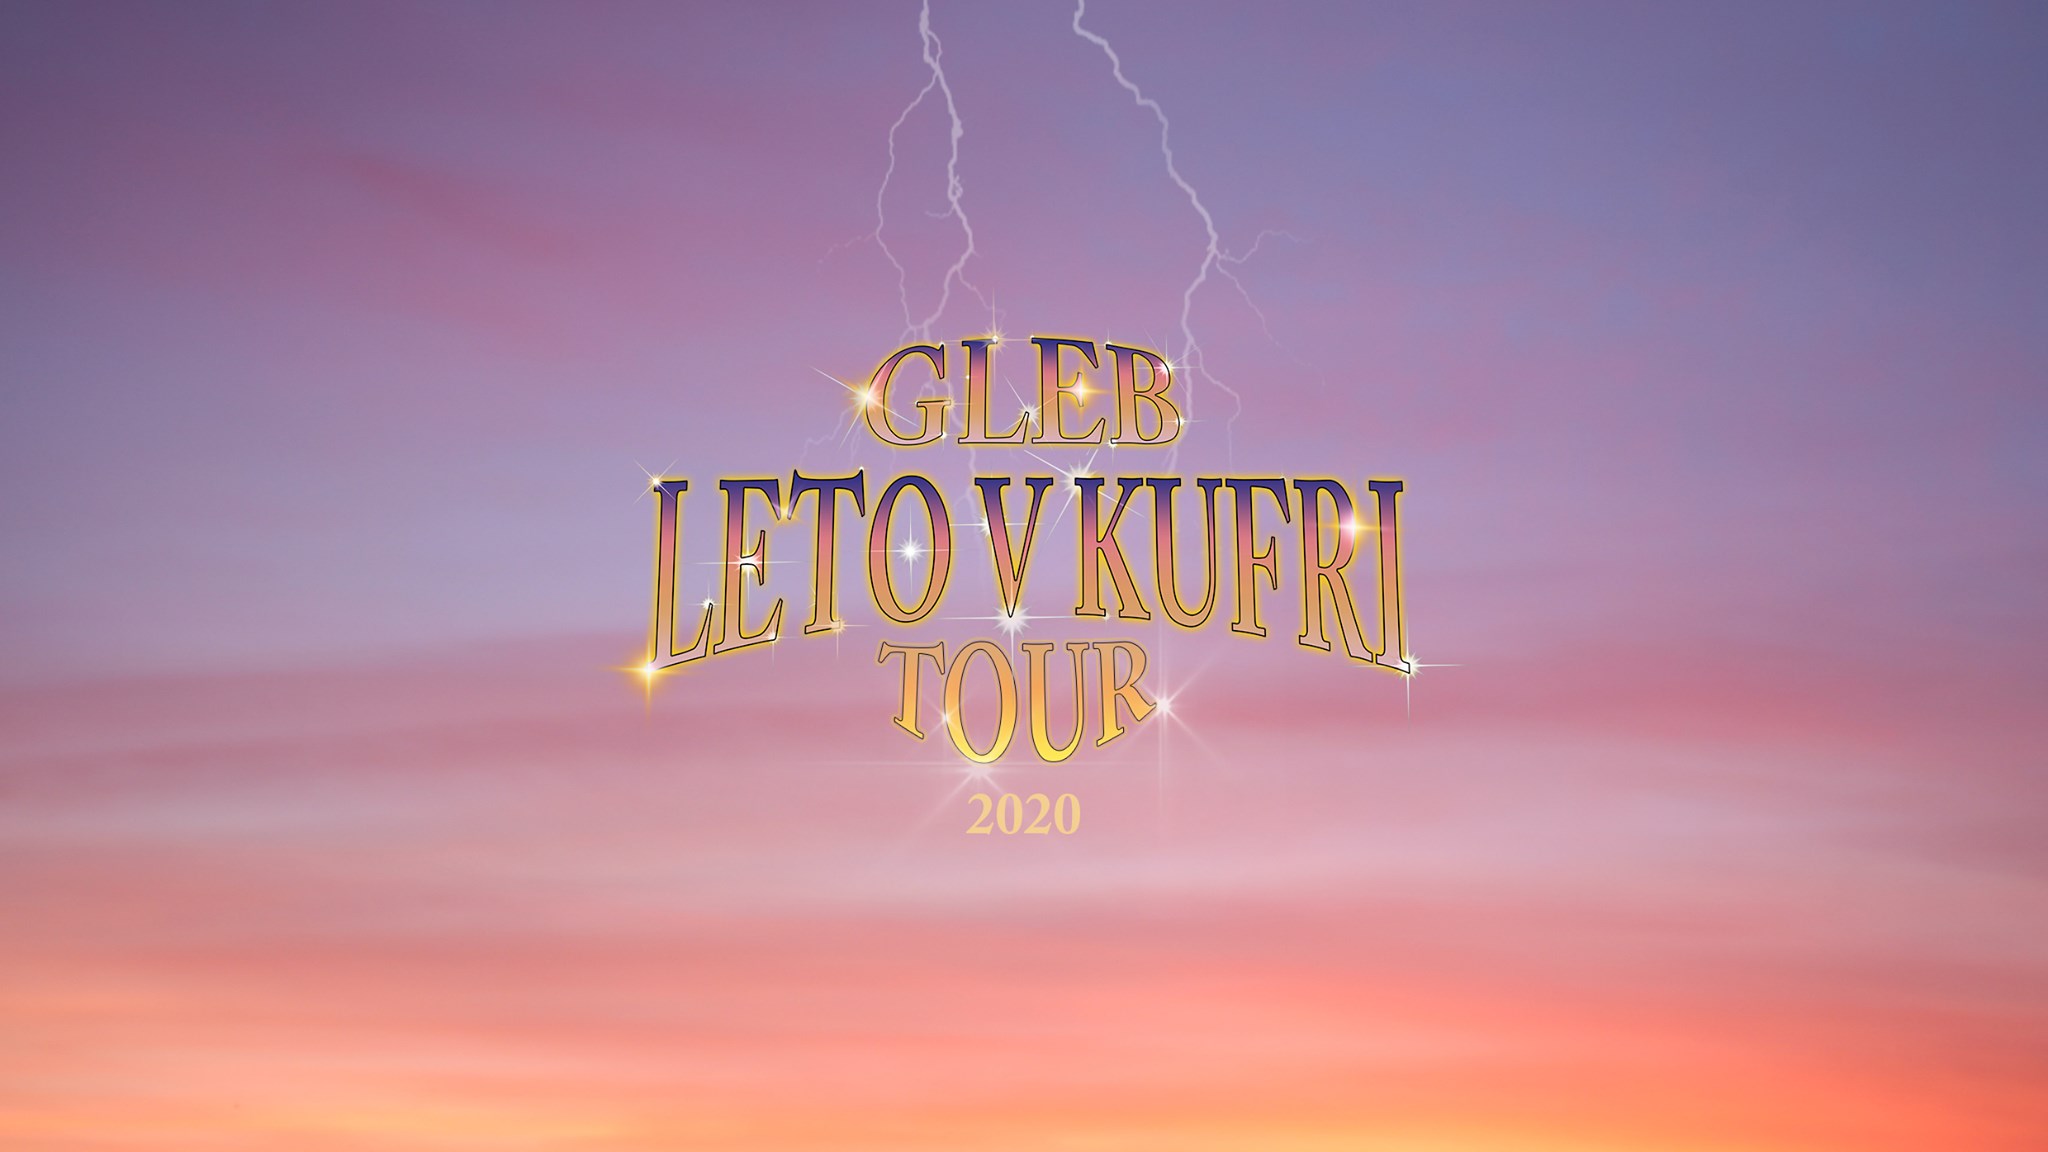 Trenčín - GLEB LETO V KUFRI tour 2020 Elements